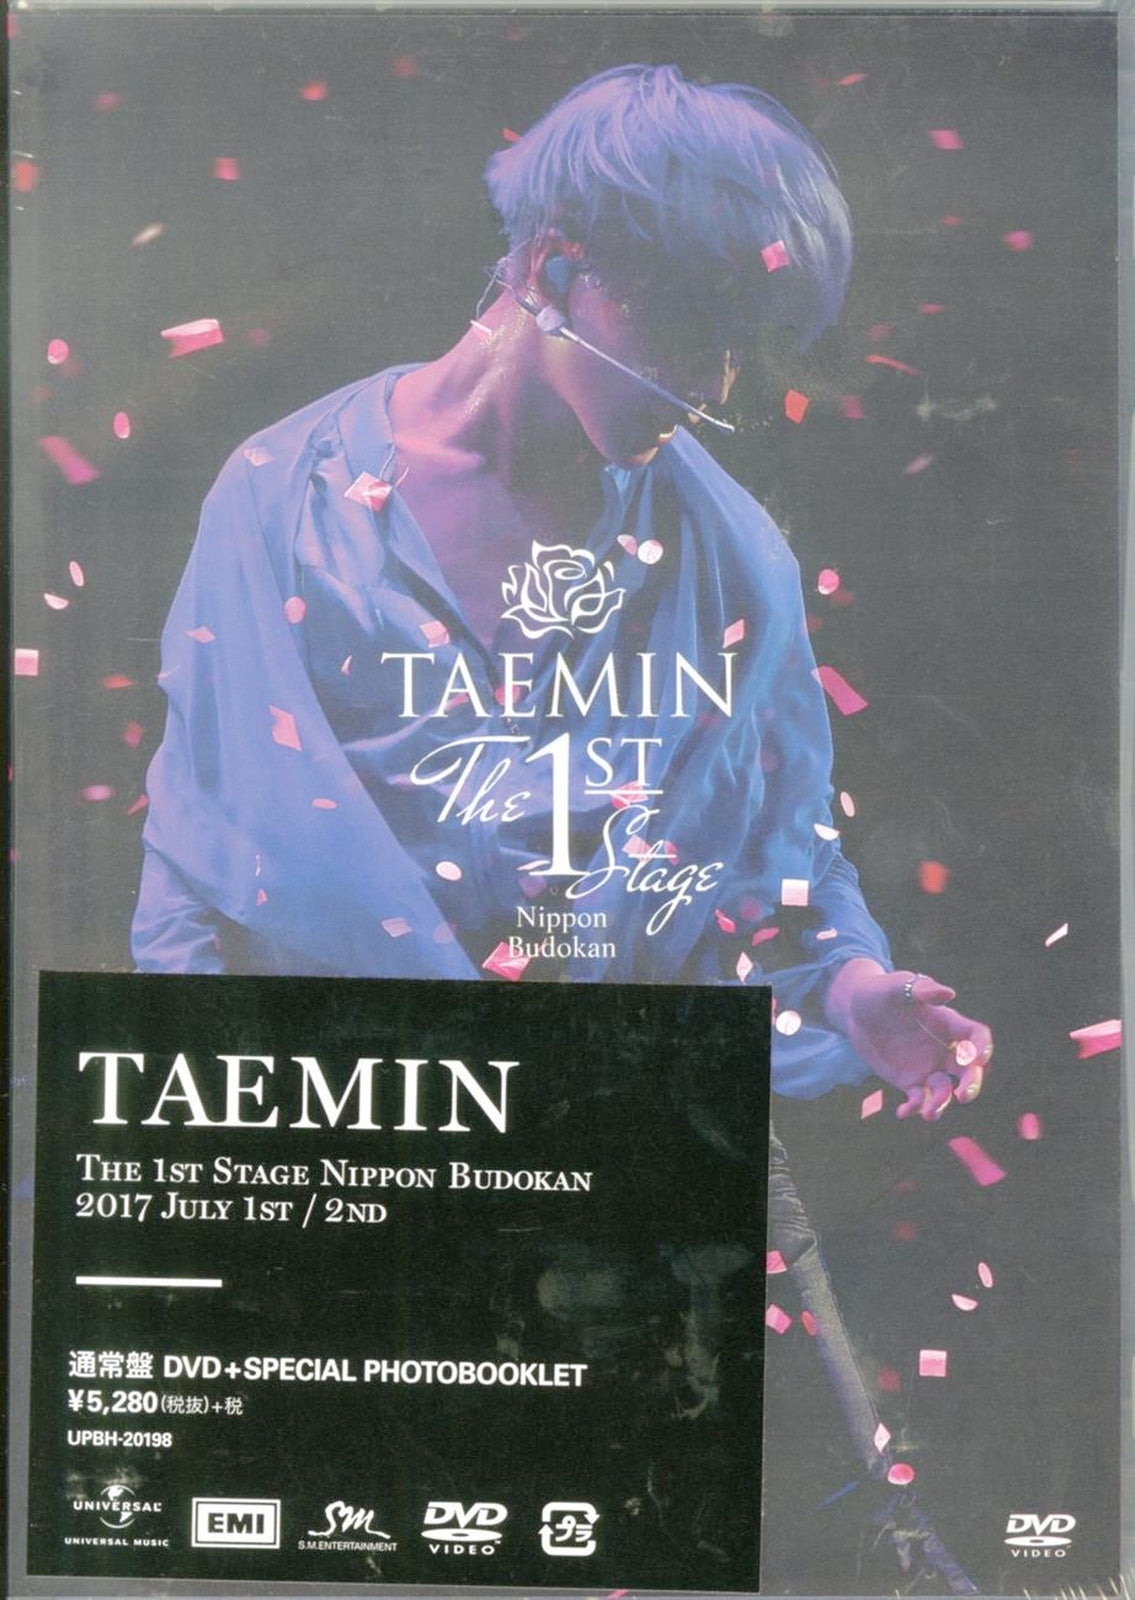 Taemin - Taemin The 1St Stage' Nippon Budokan - Japan DVD+Book – CDs Vinyl  Japan Store DVD